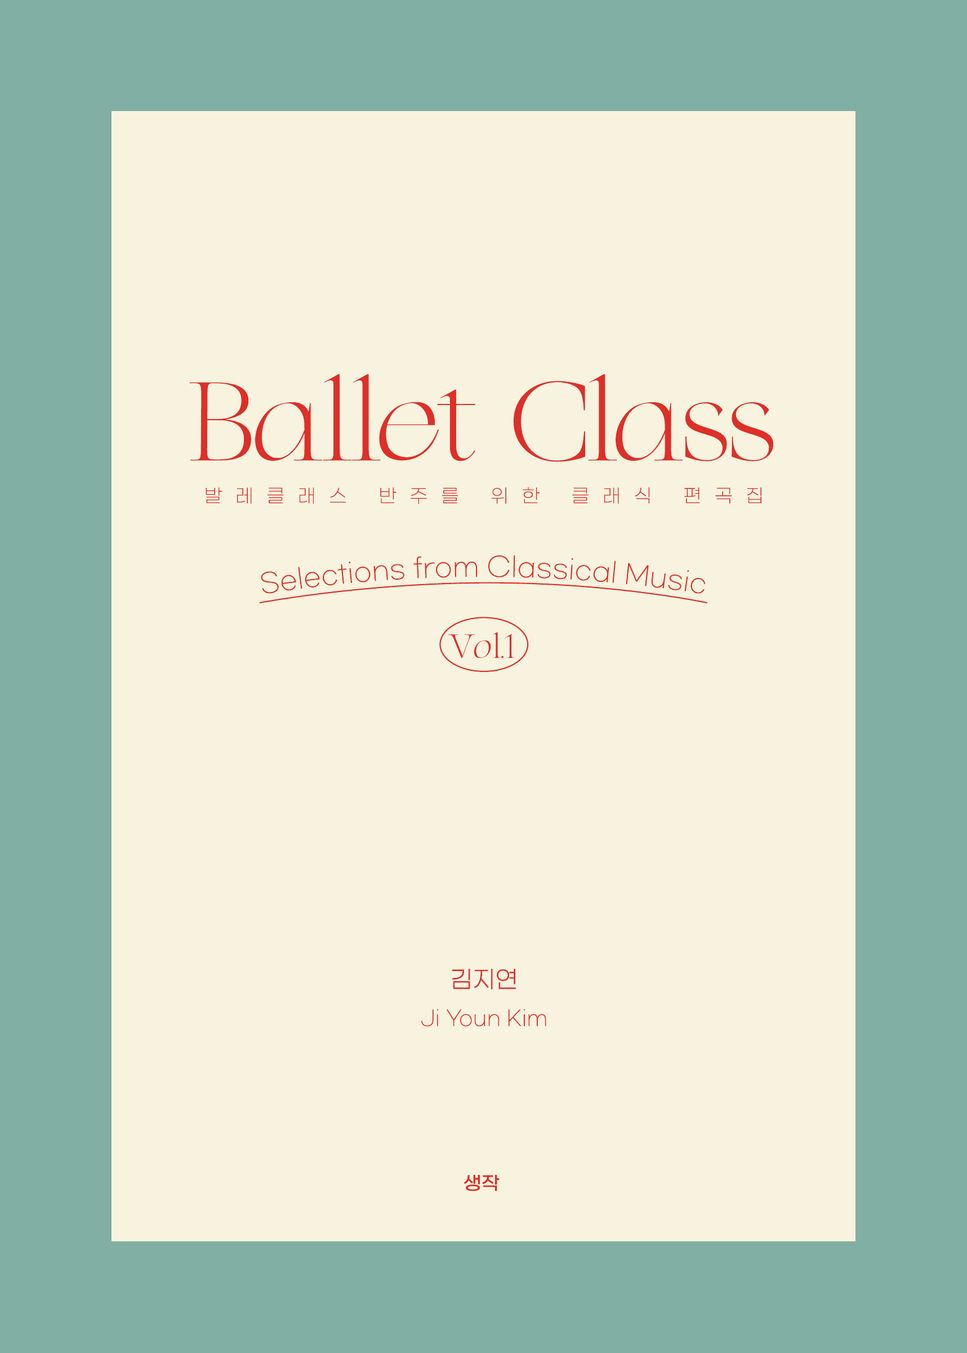 Ji Youn Kim - Ballet Class vol. 1 - 28. Coda